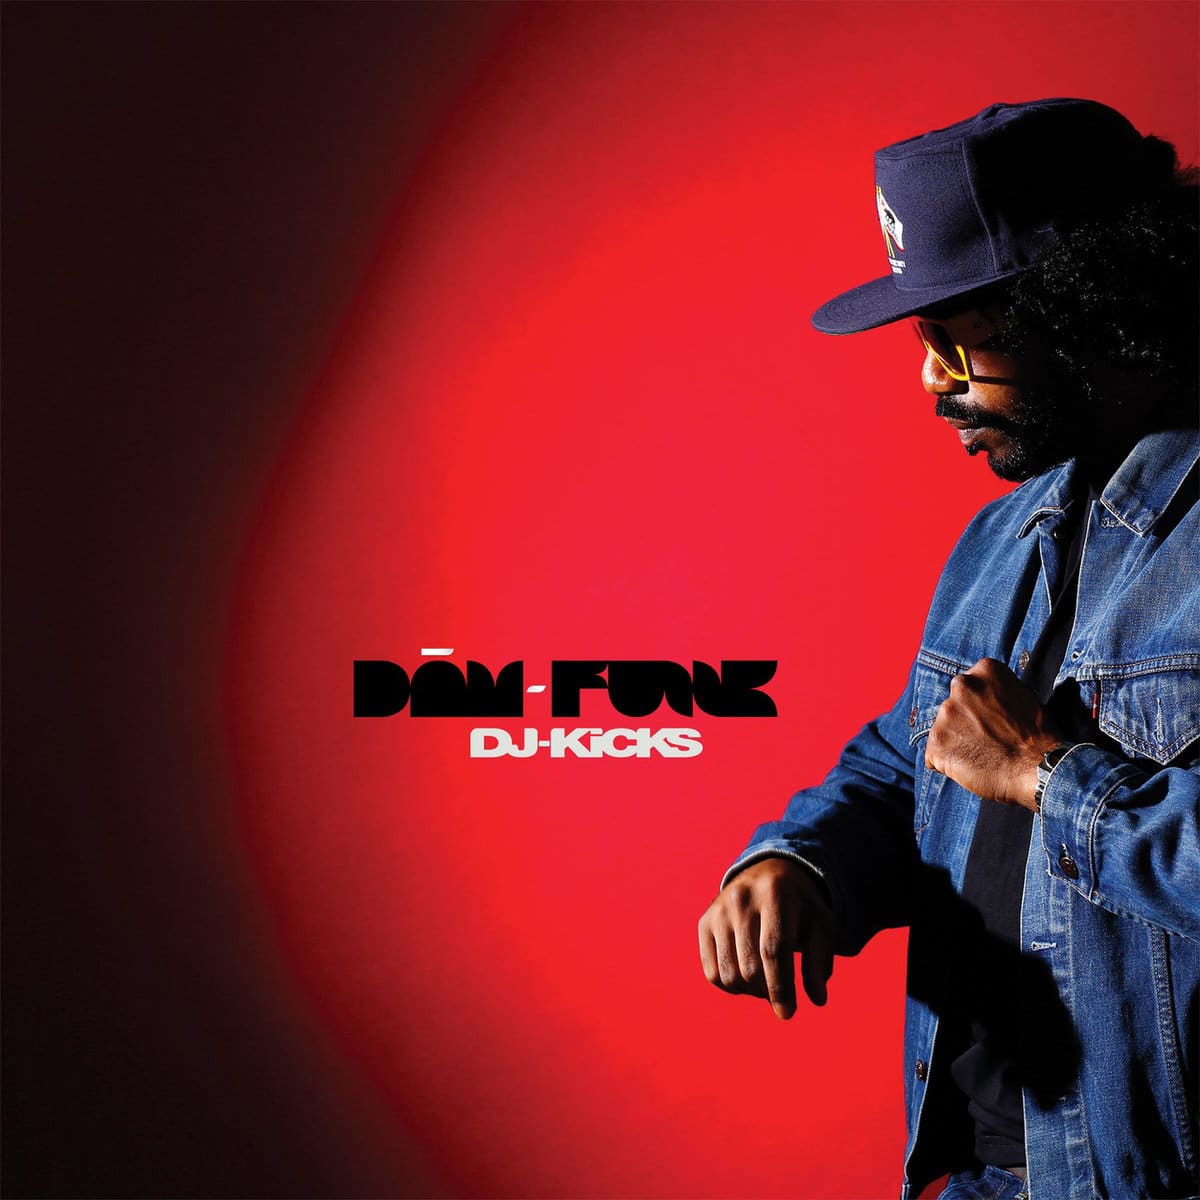 Dam-Funk - "DJ Kicks: Dam-Funk" (Release)